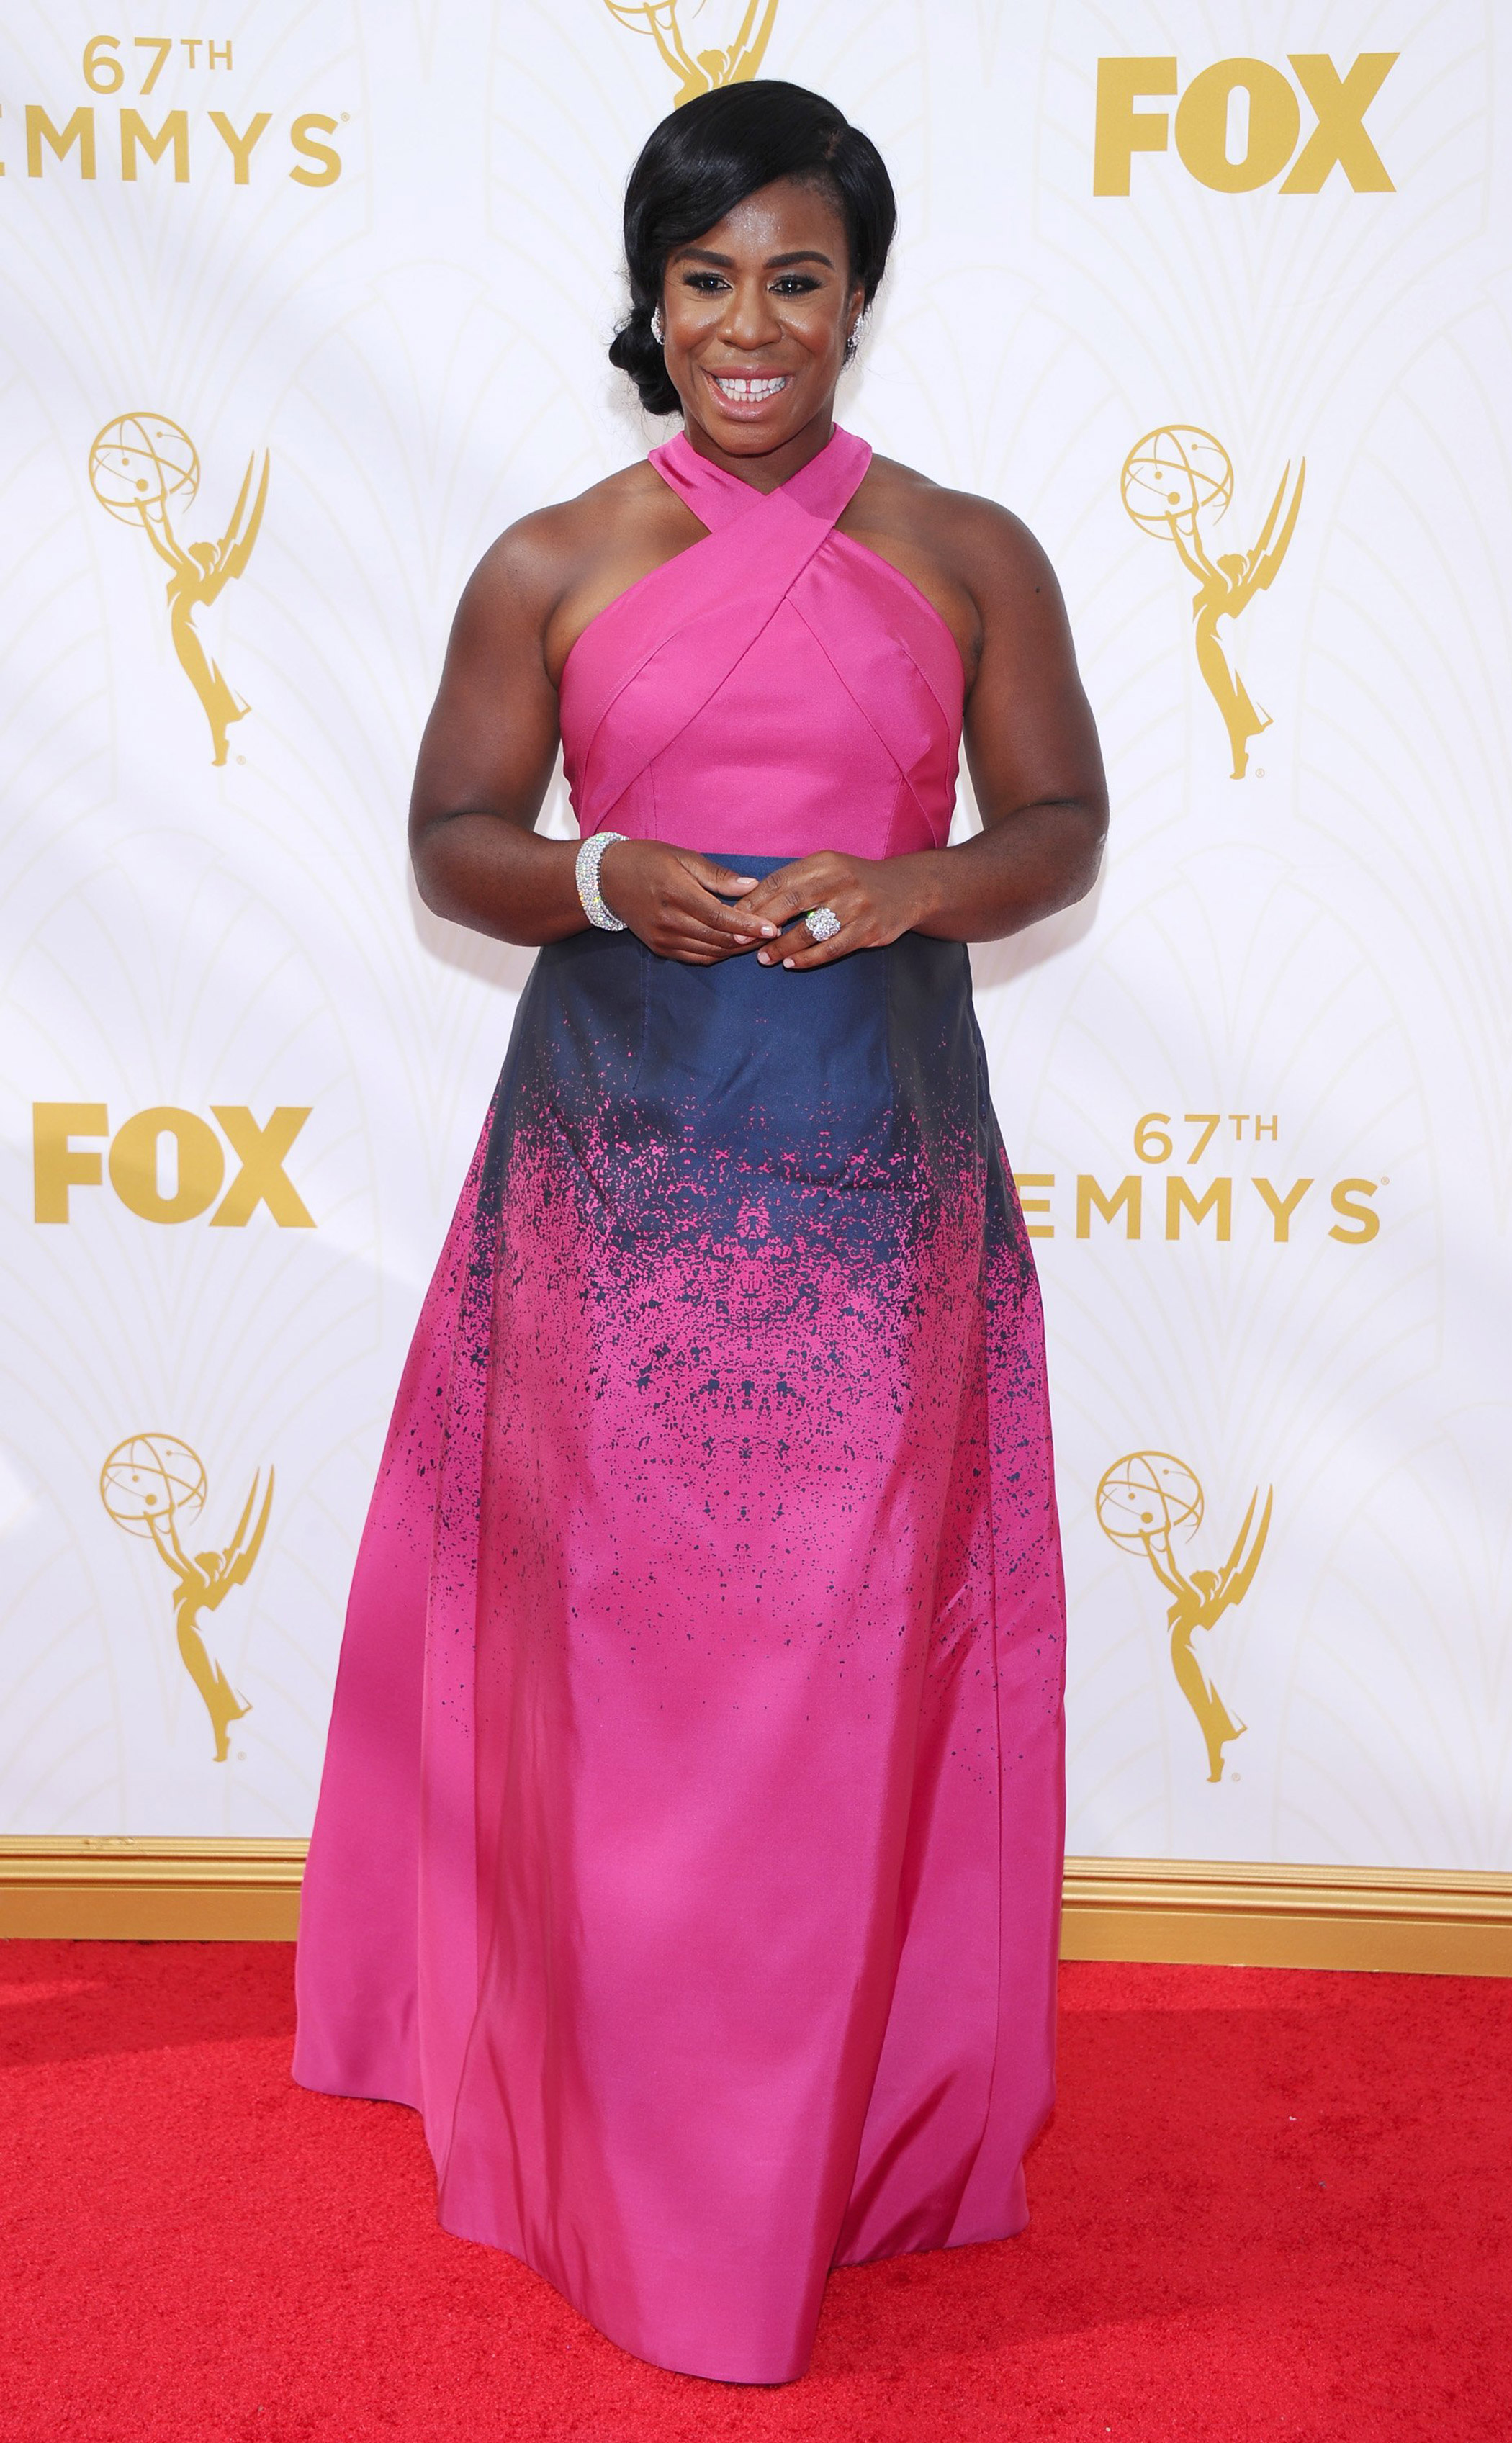 67th Emmys Awards - Uzo Aduba - 2015